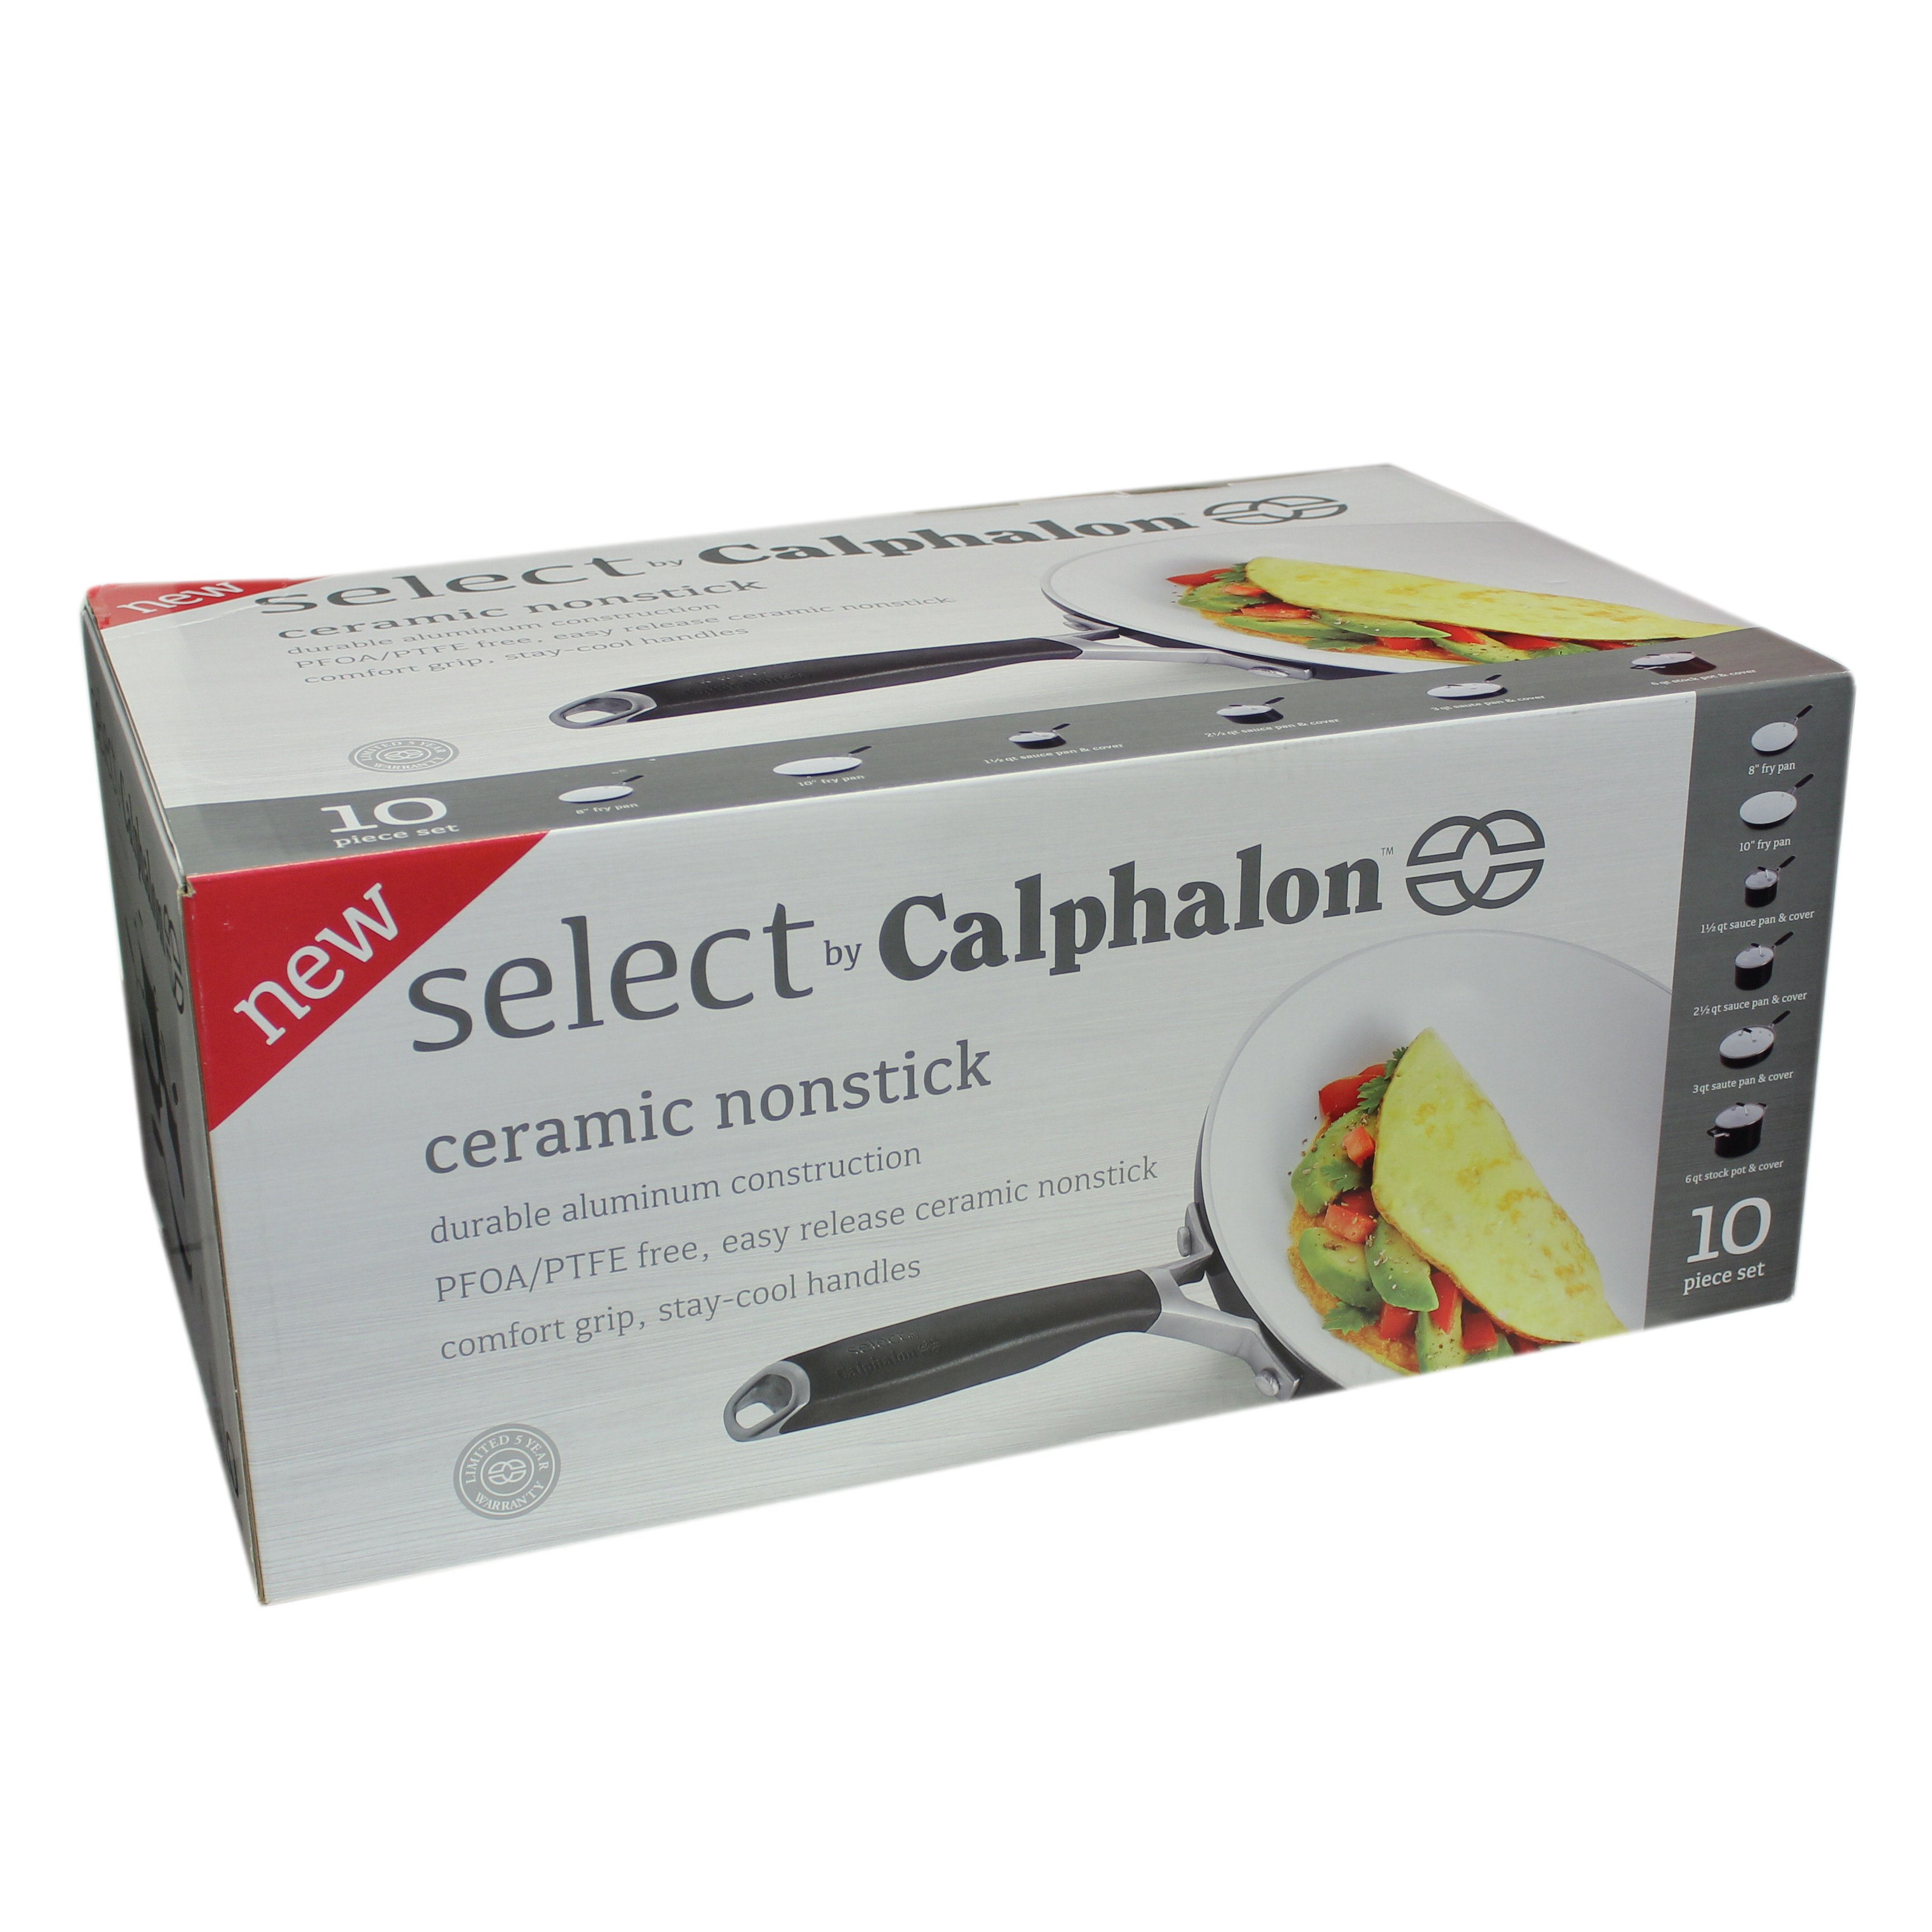 Calphalon Select Ceramic Nonstick 3 QT Saute Pan